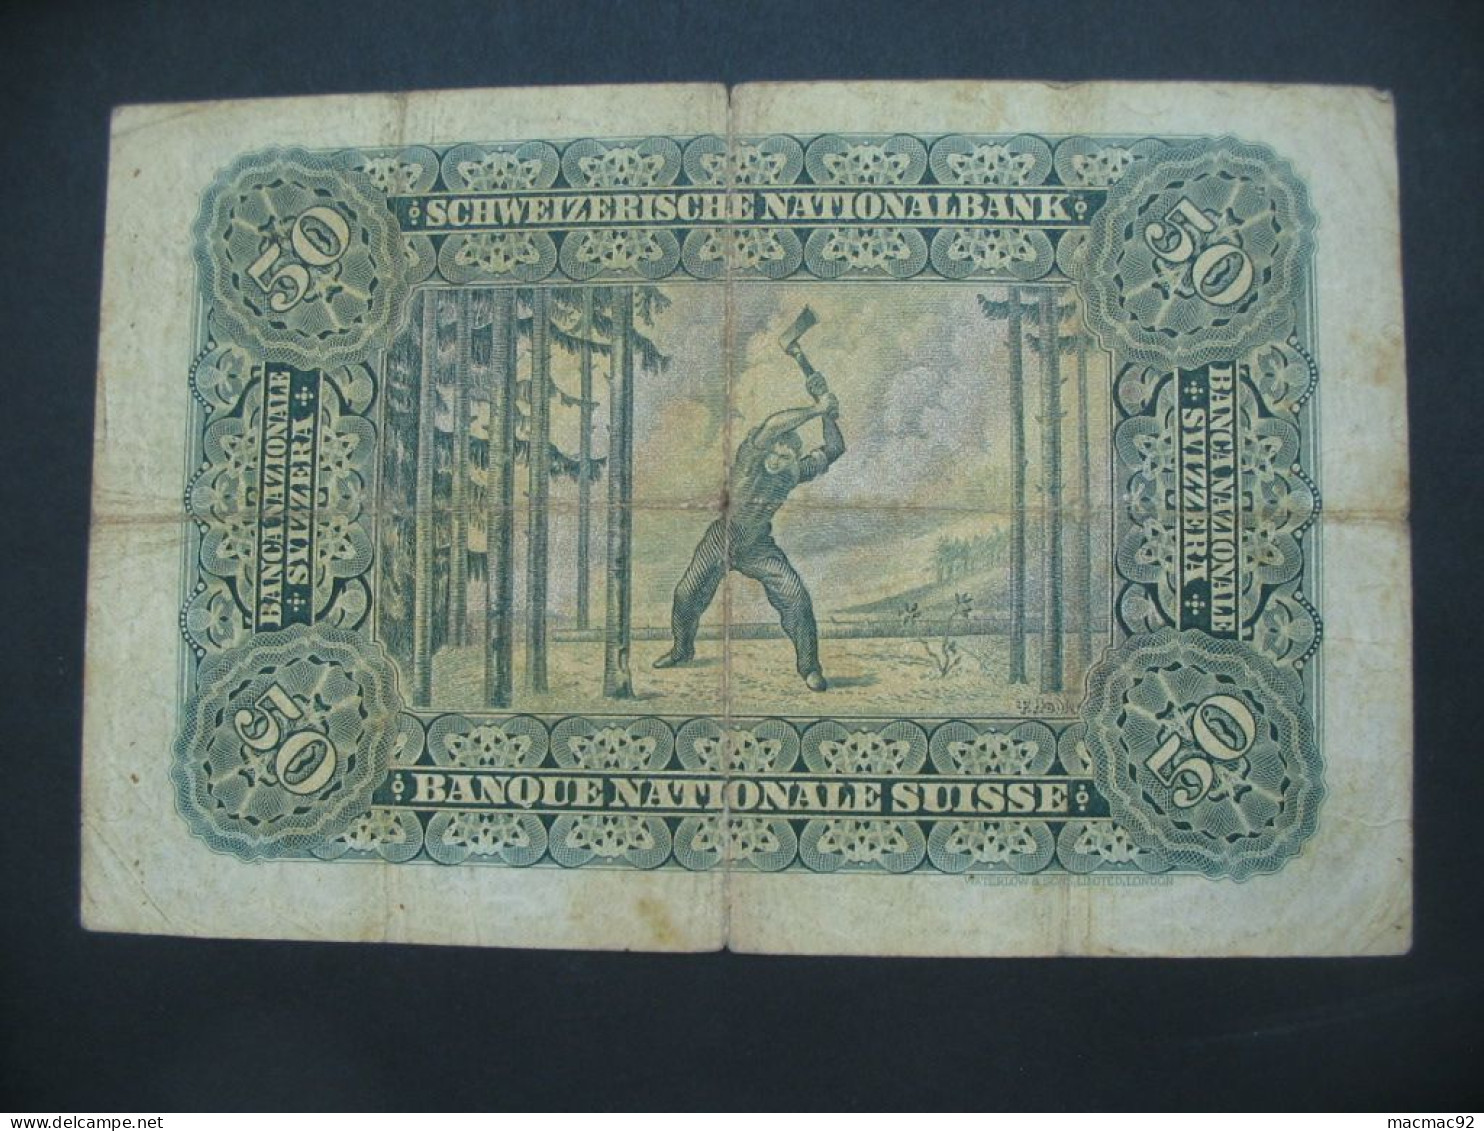 RARE Billet Suisse - 50 Francs 1937 Schweizerische Nationalbank **** EN ACHAT IMMEDIAT **** - Suiza